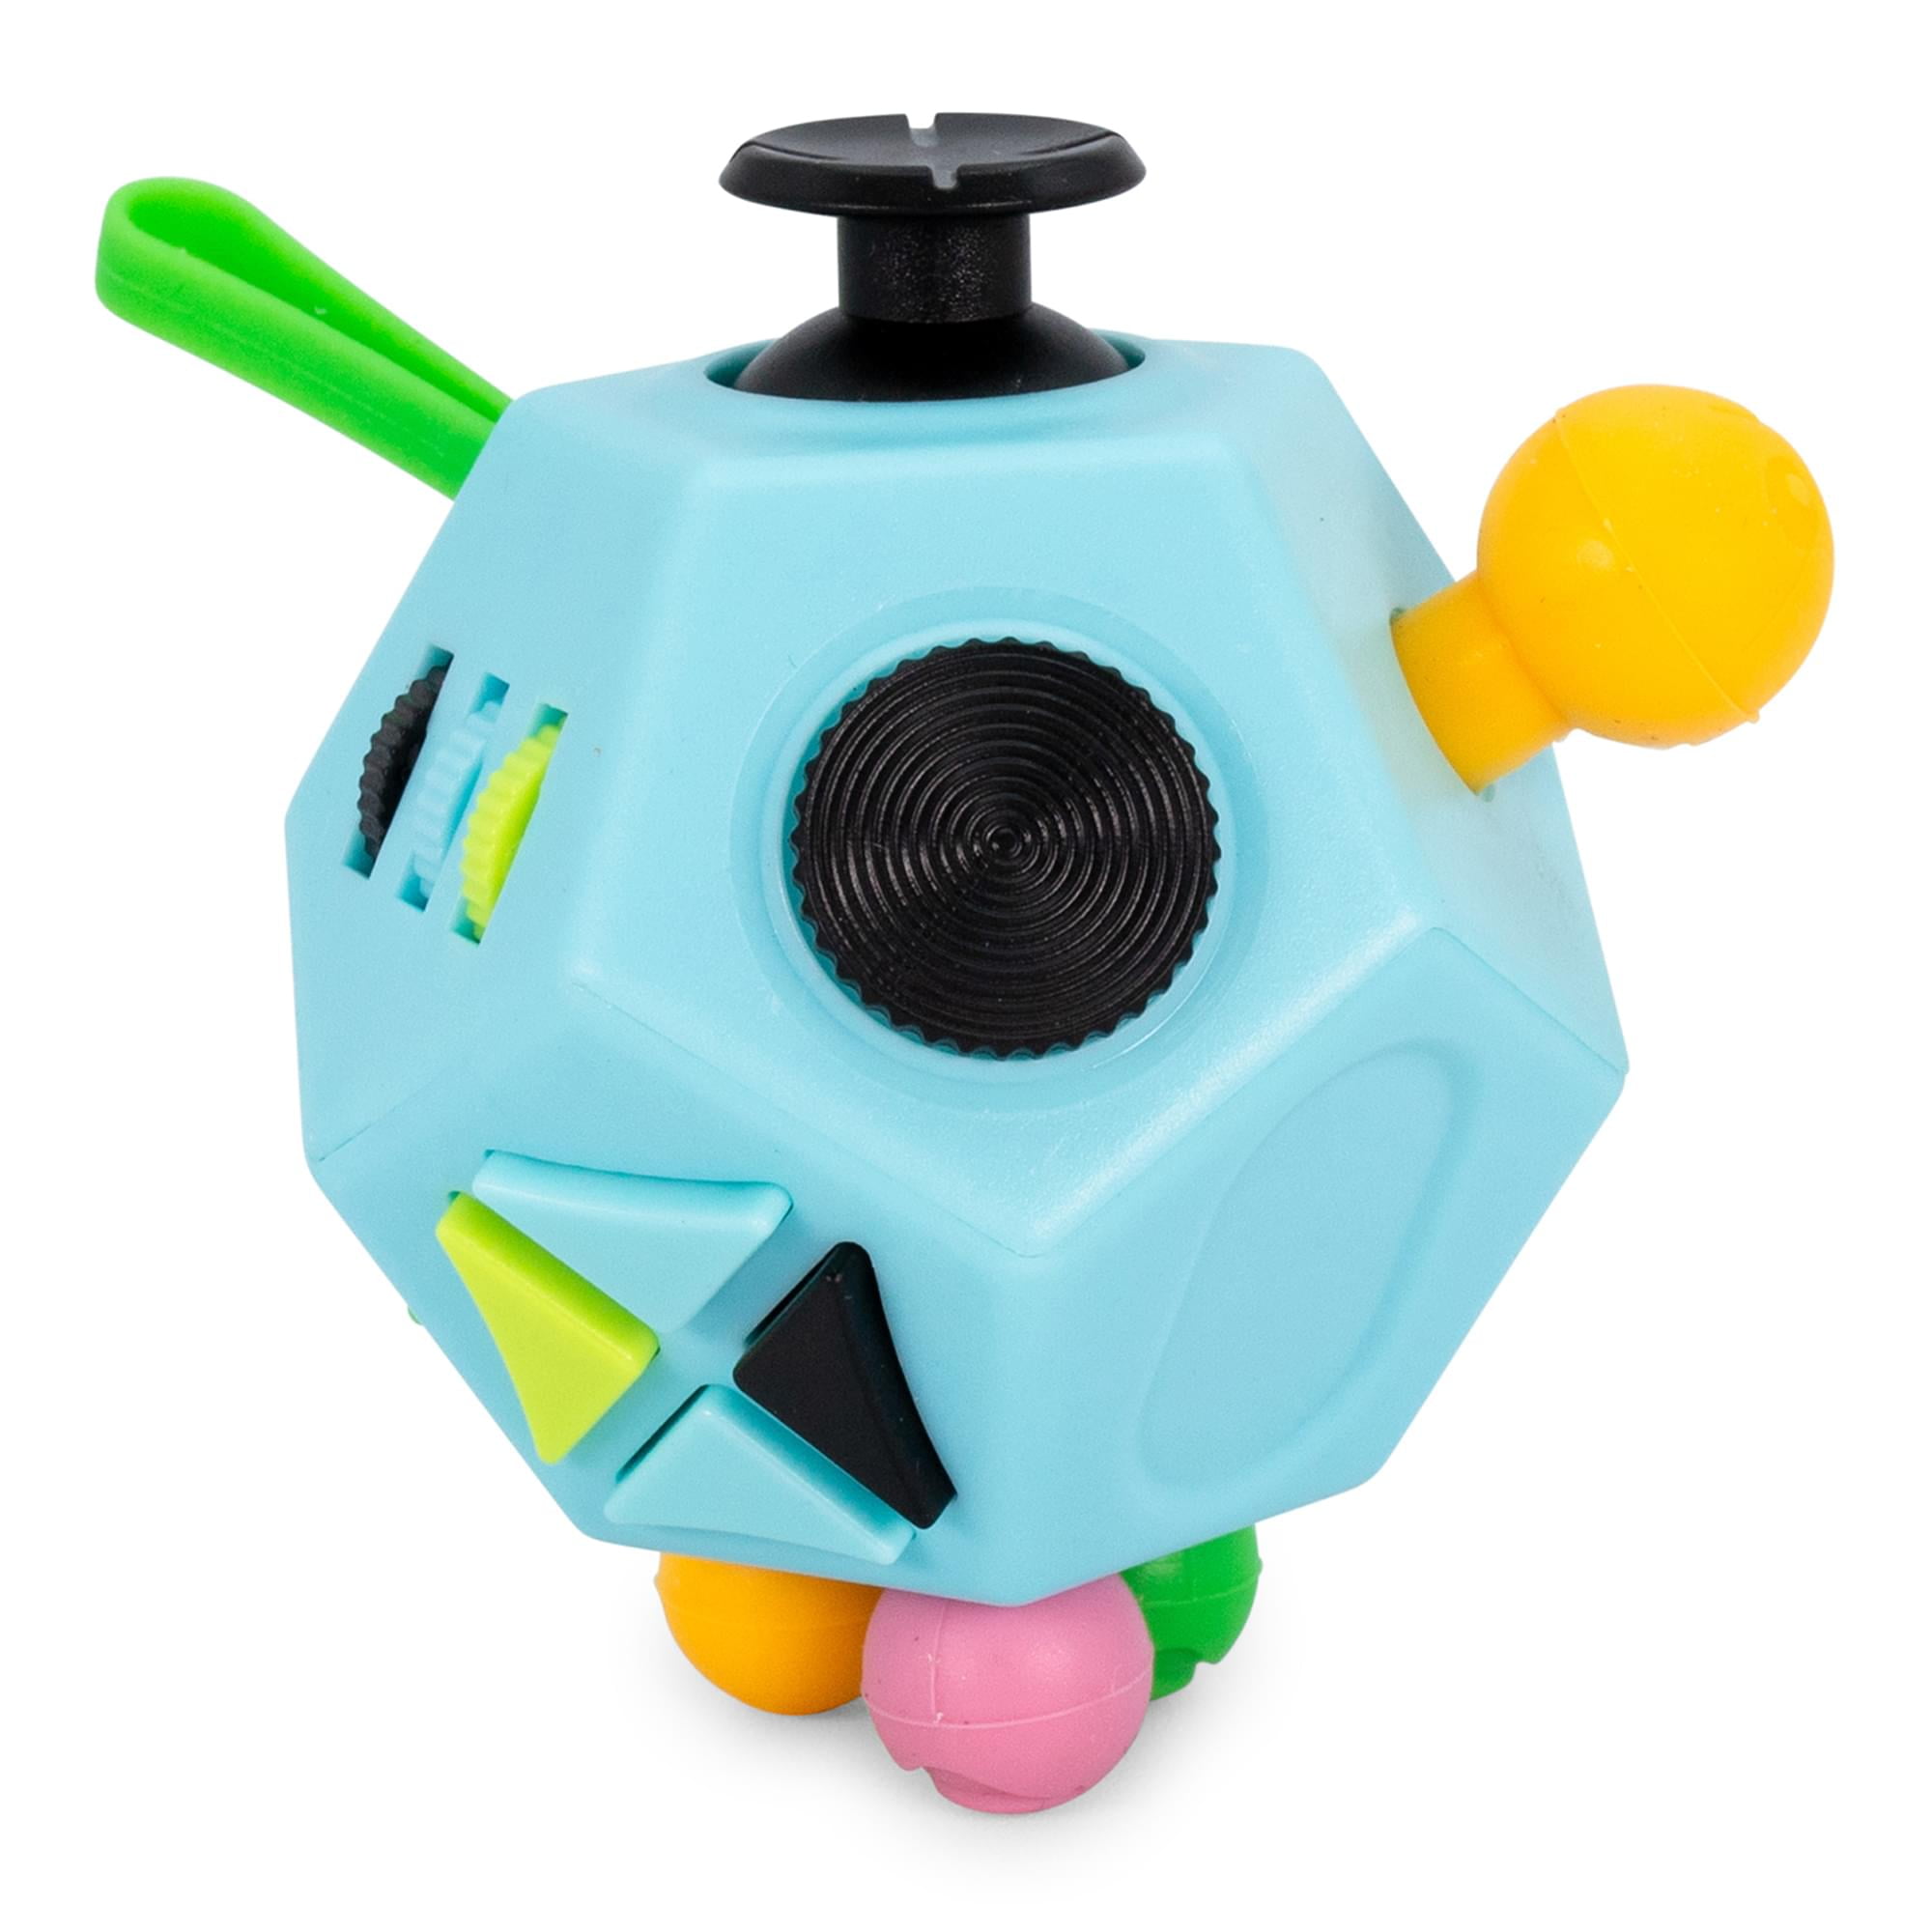 Details about   Luminous Fidget Ball Rainbow Magic Puzzle Rubiks Cube Toy Autism Stress Relief 